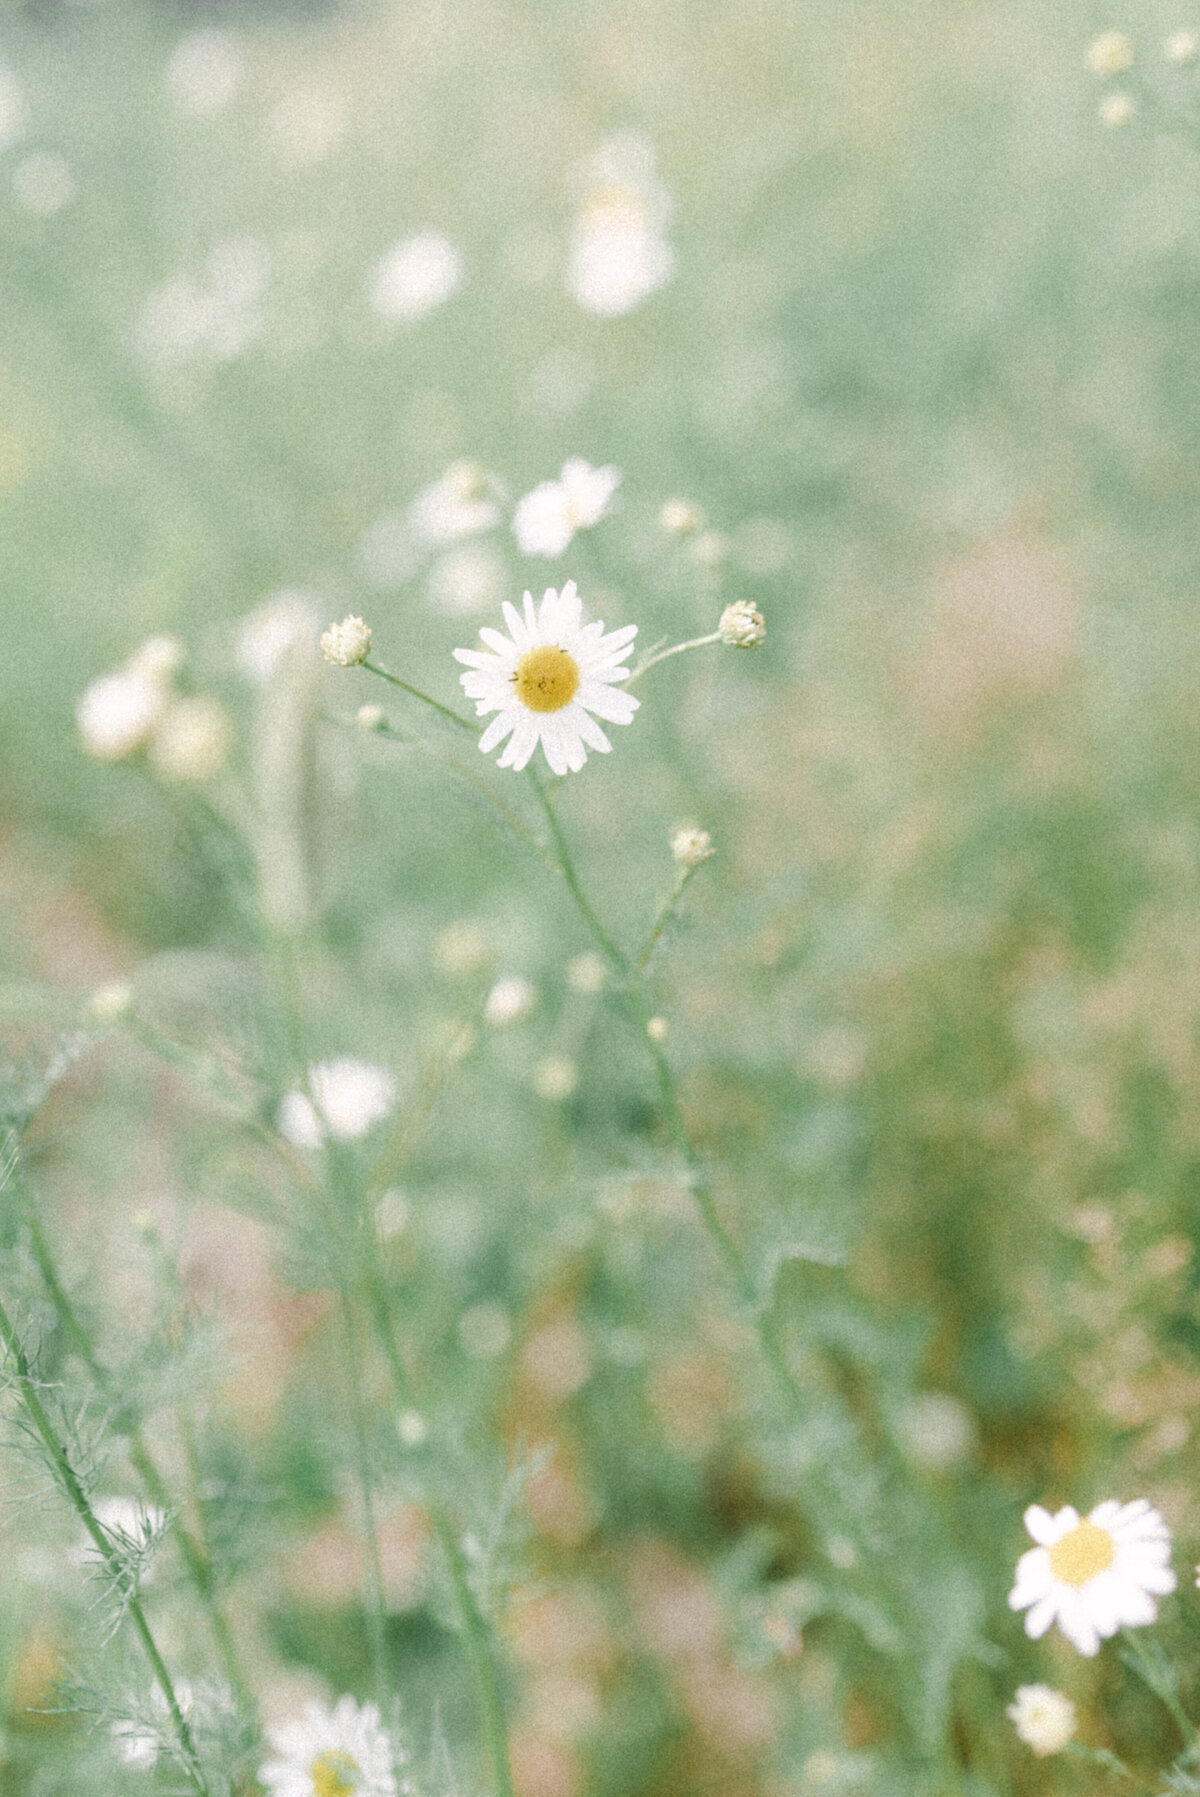 A flower on a flower field. An image by wedding photographer Hannika Gabrielsson.